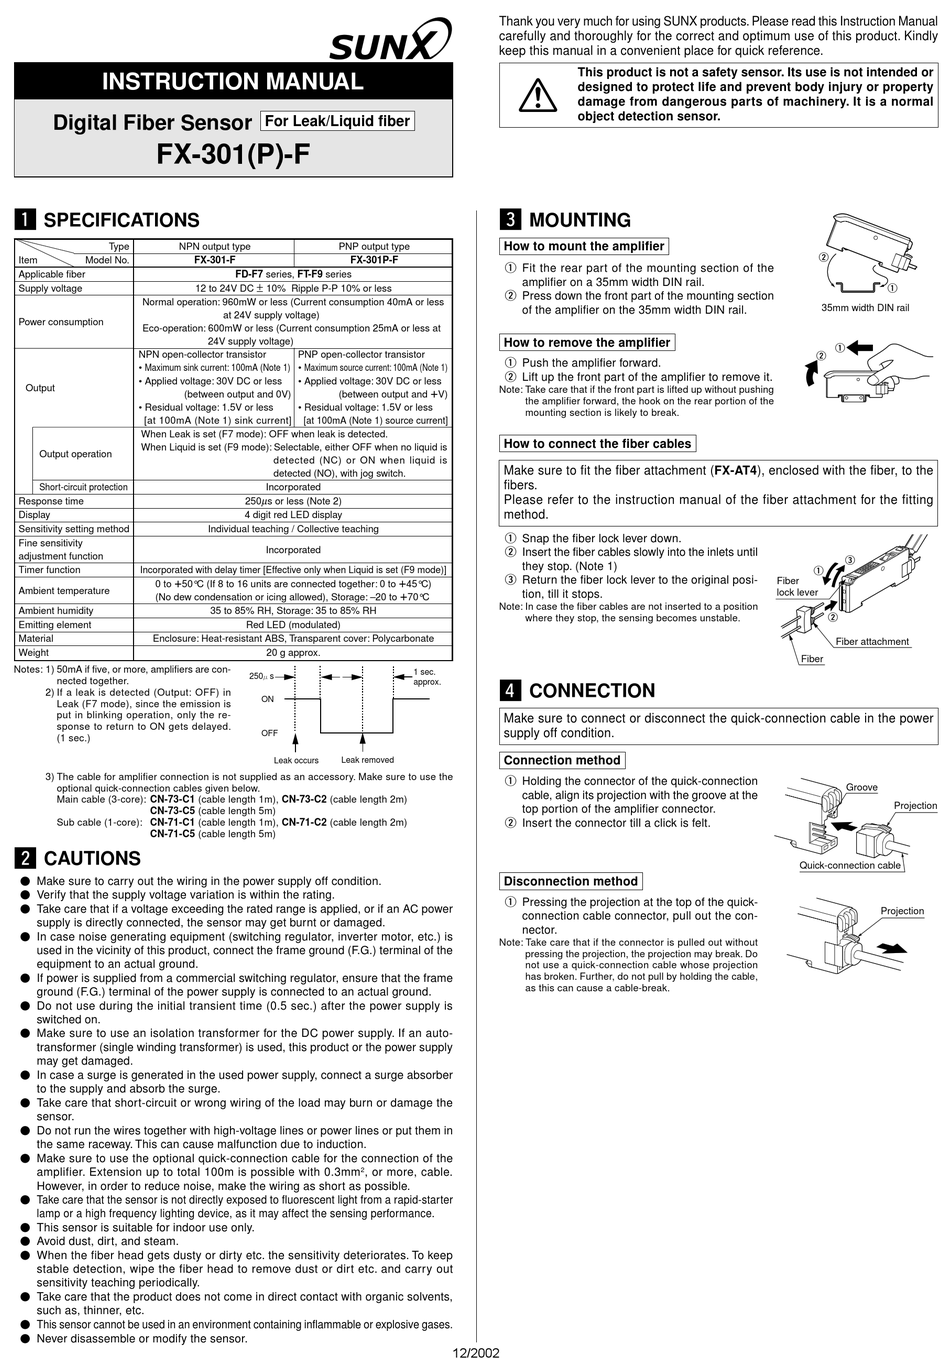 SUNX FX-301-F INSTRUCTION MANUAL Pdf Download | ManualsLib